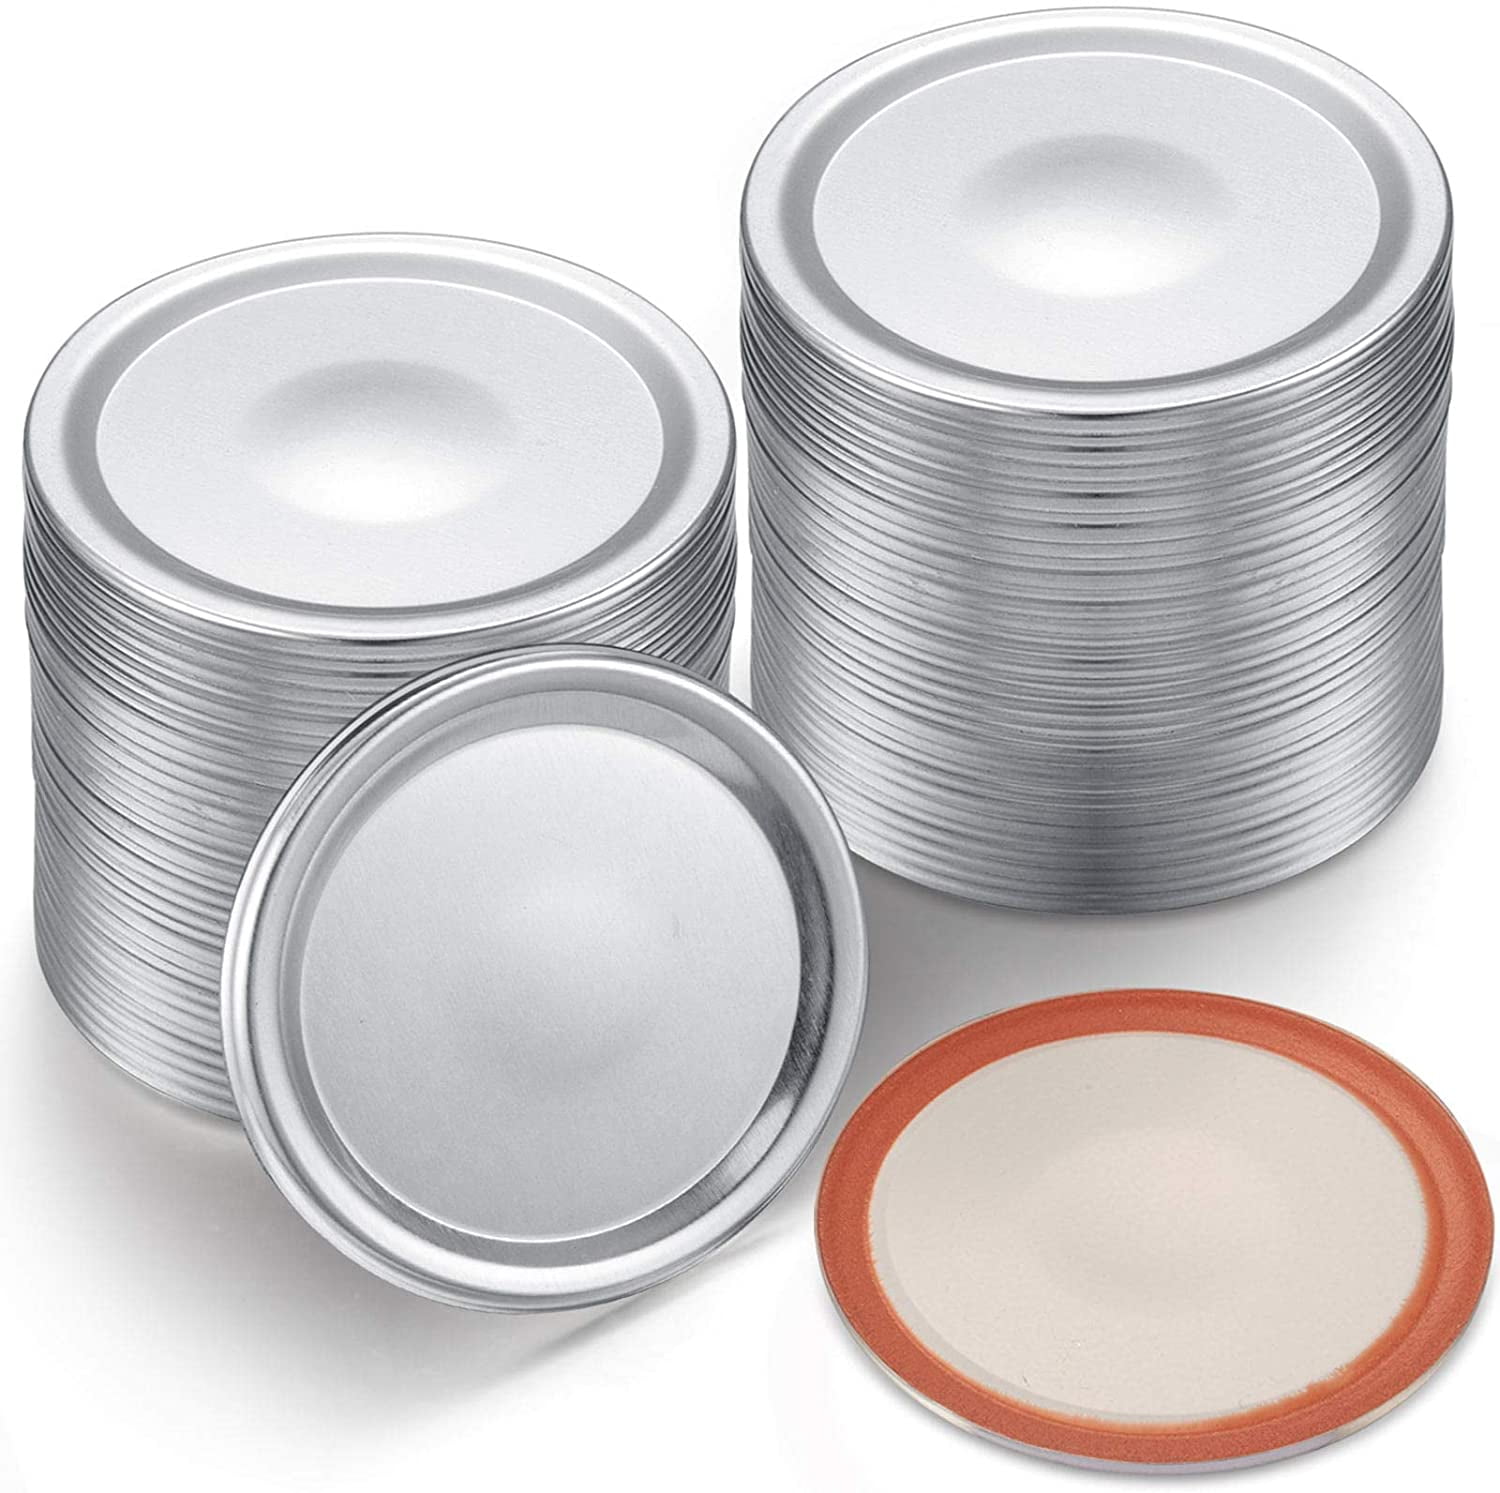 24Pcs Regular Mouth Canning Lids,86MM Mason Jar Canning Lids, Reusable